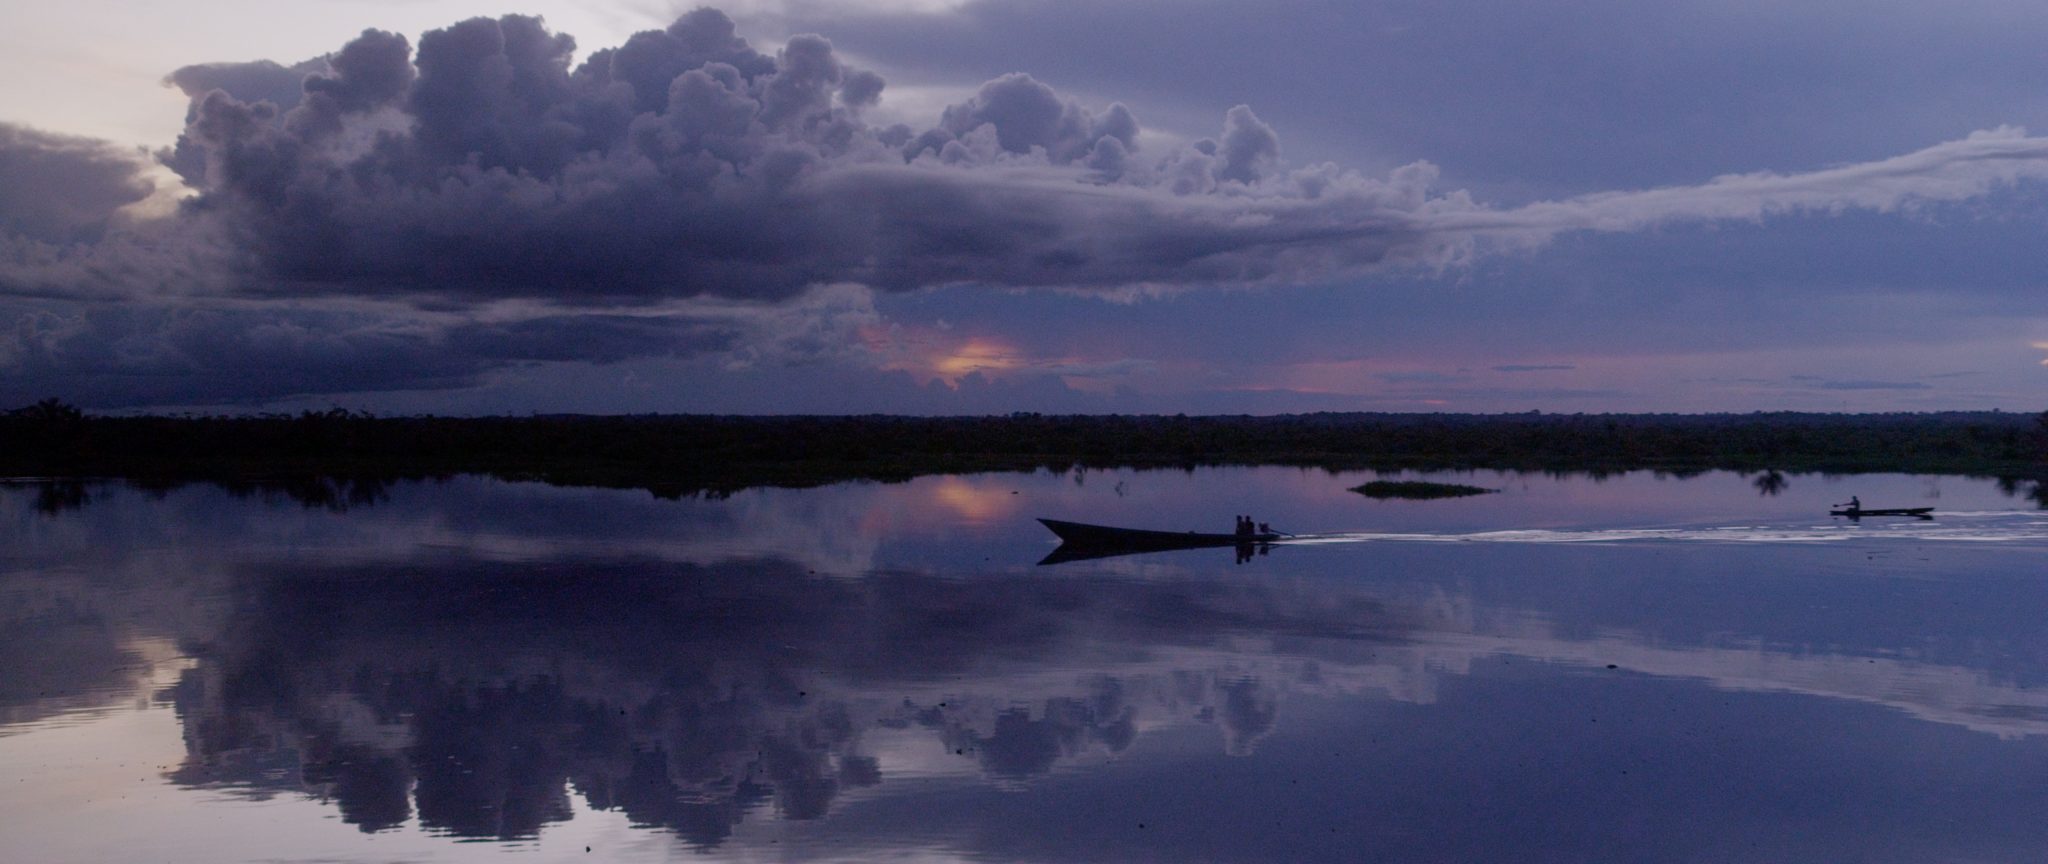 Sunset of the River Amazon, near Iquitos, Peru. Photo credit: Yoho Media.